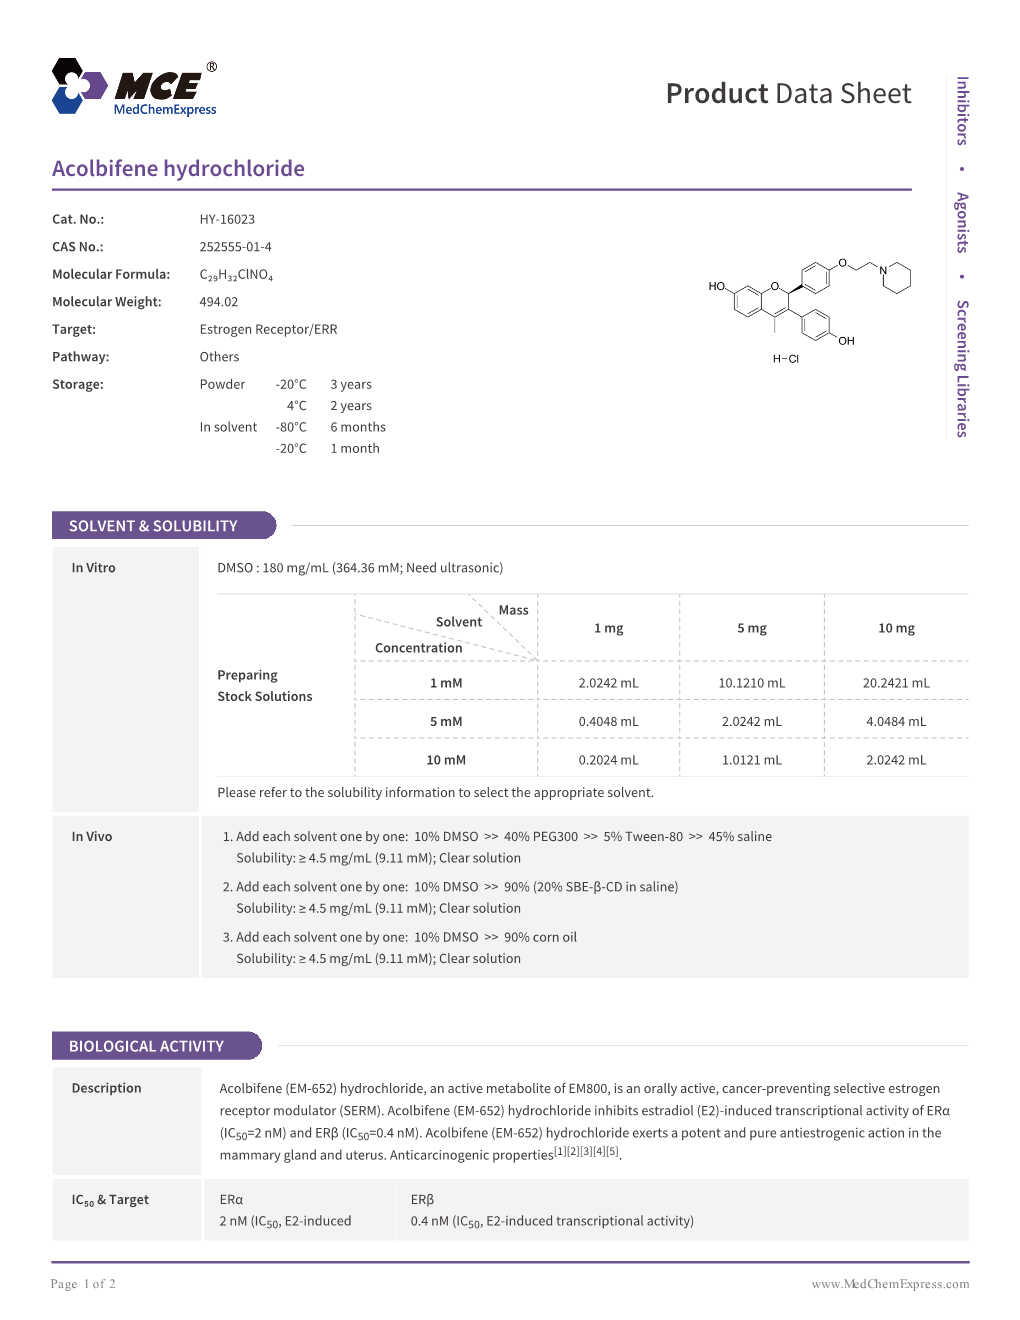 Acolbifene Hydrochloride | Medchemexpress